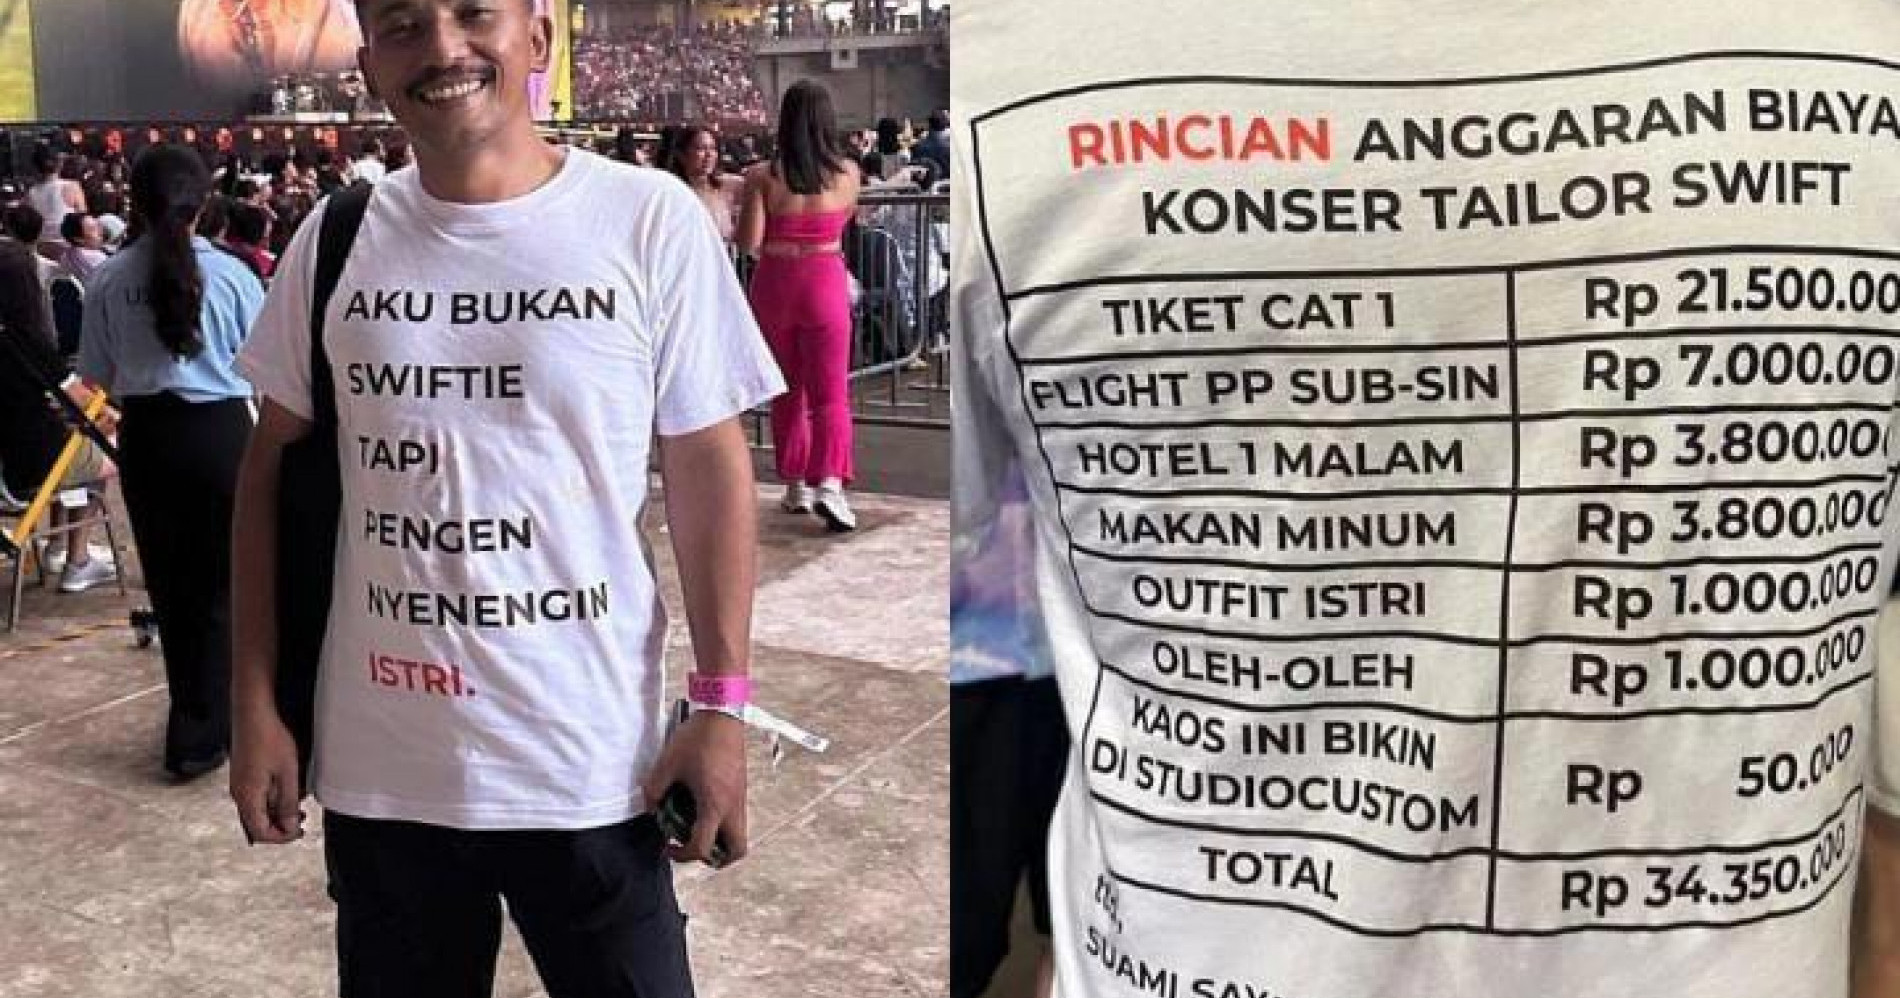 Suami menggunakan kaus anggaran nonton konser Taylor Swift (Sumber gambar: Instagram)